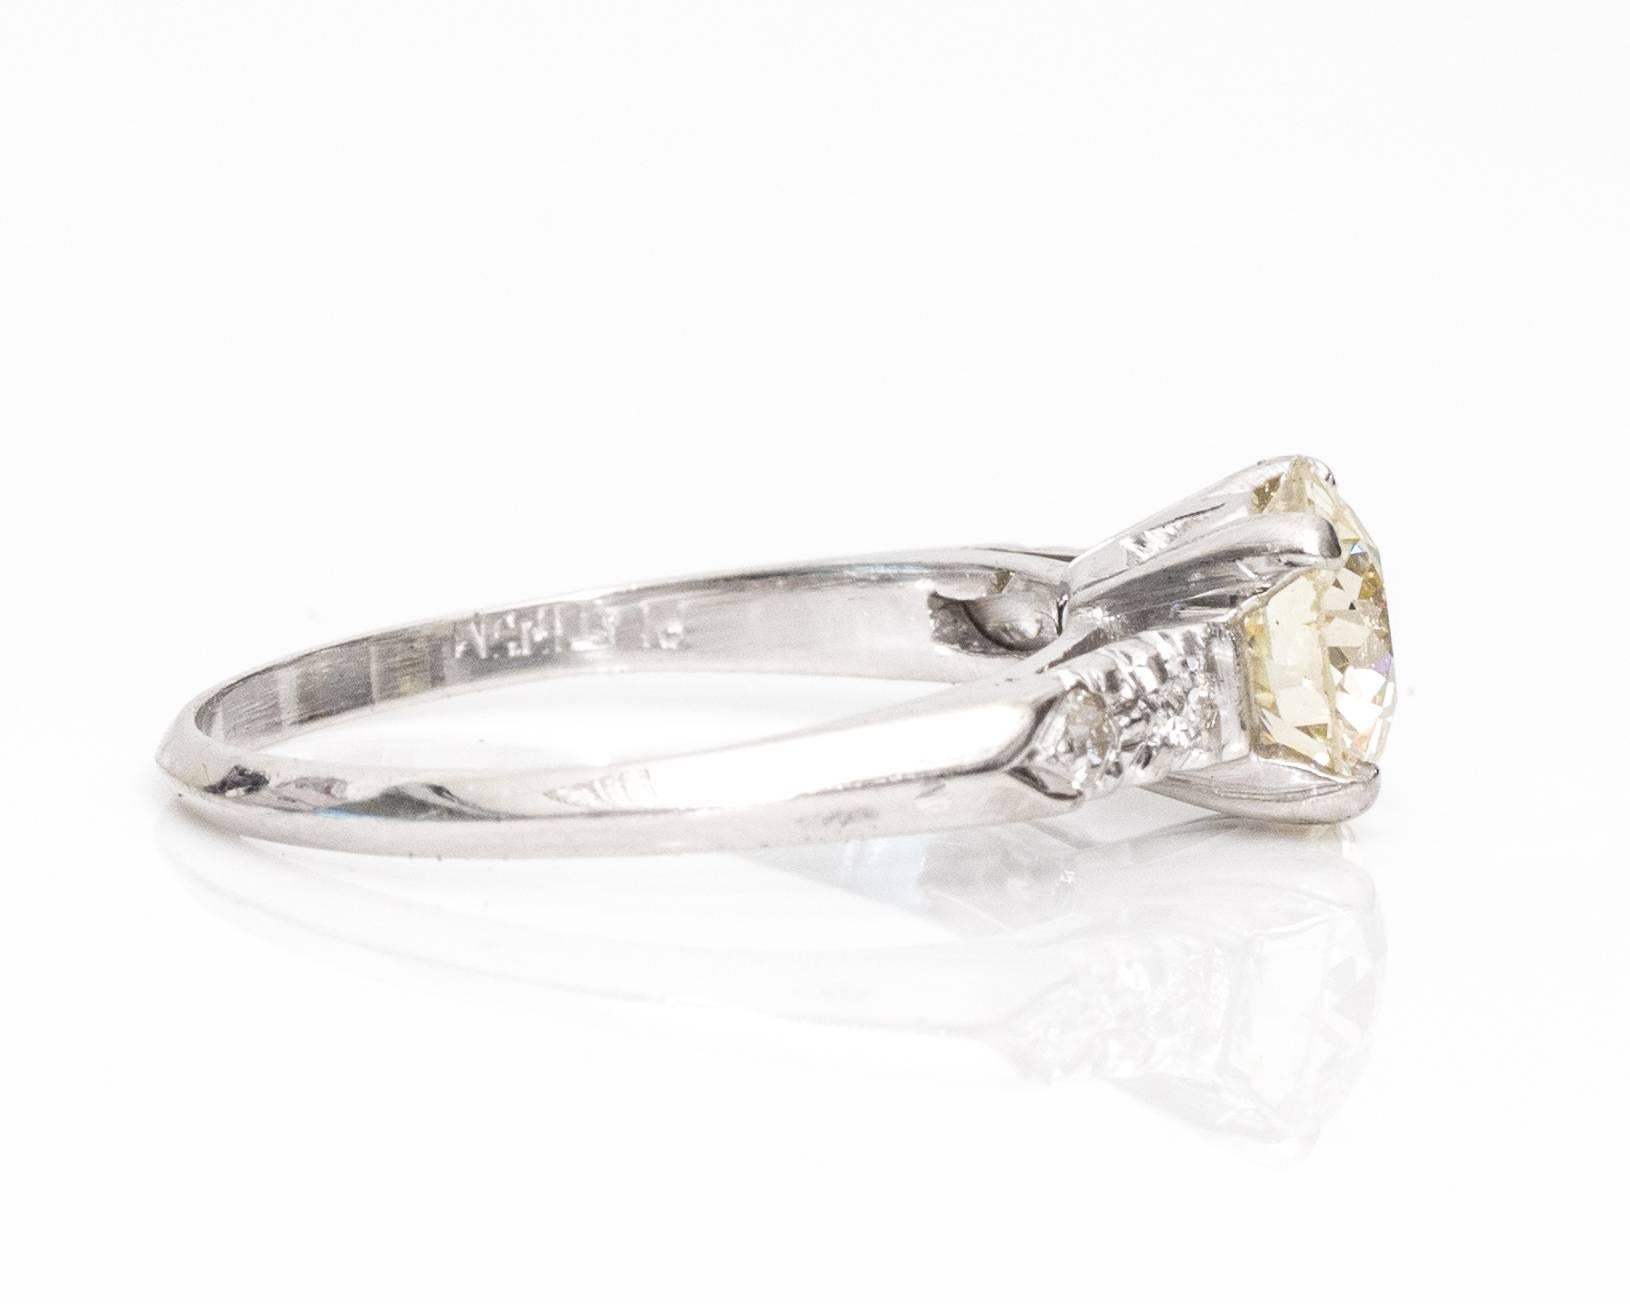 1.19 carat diamond ring